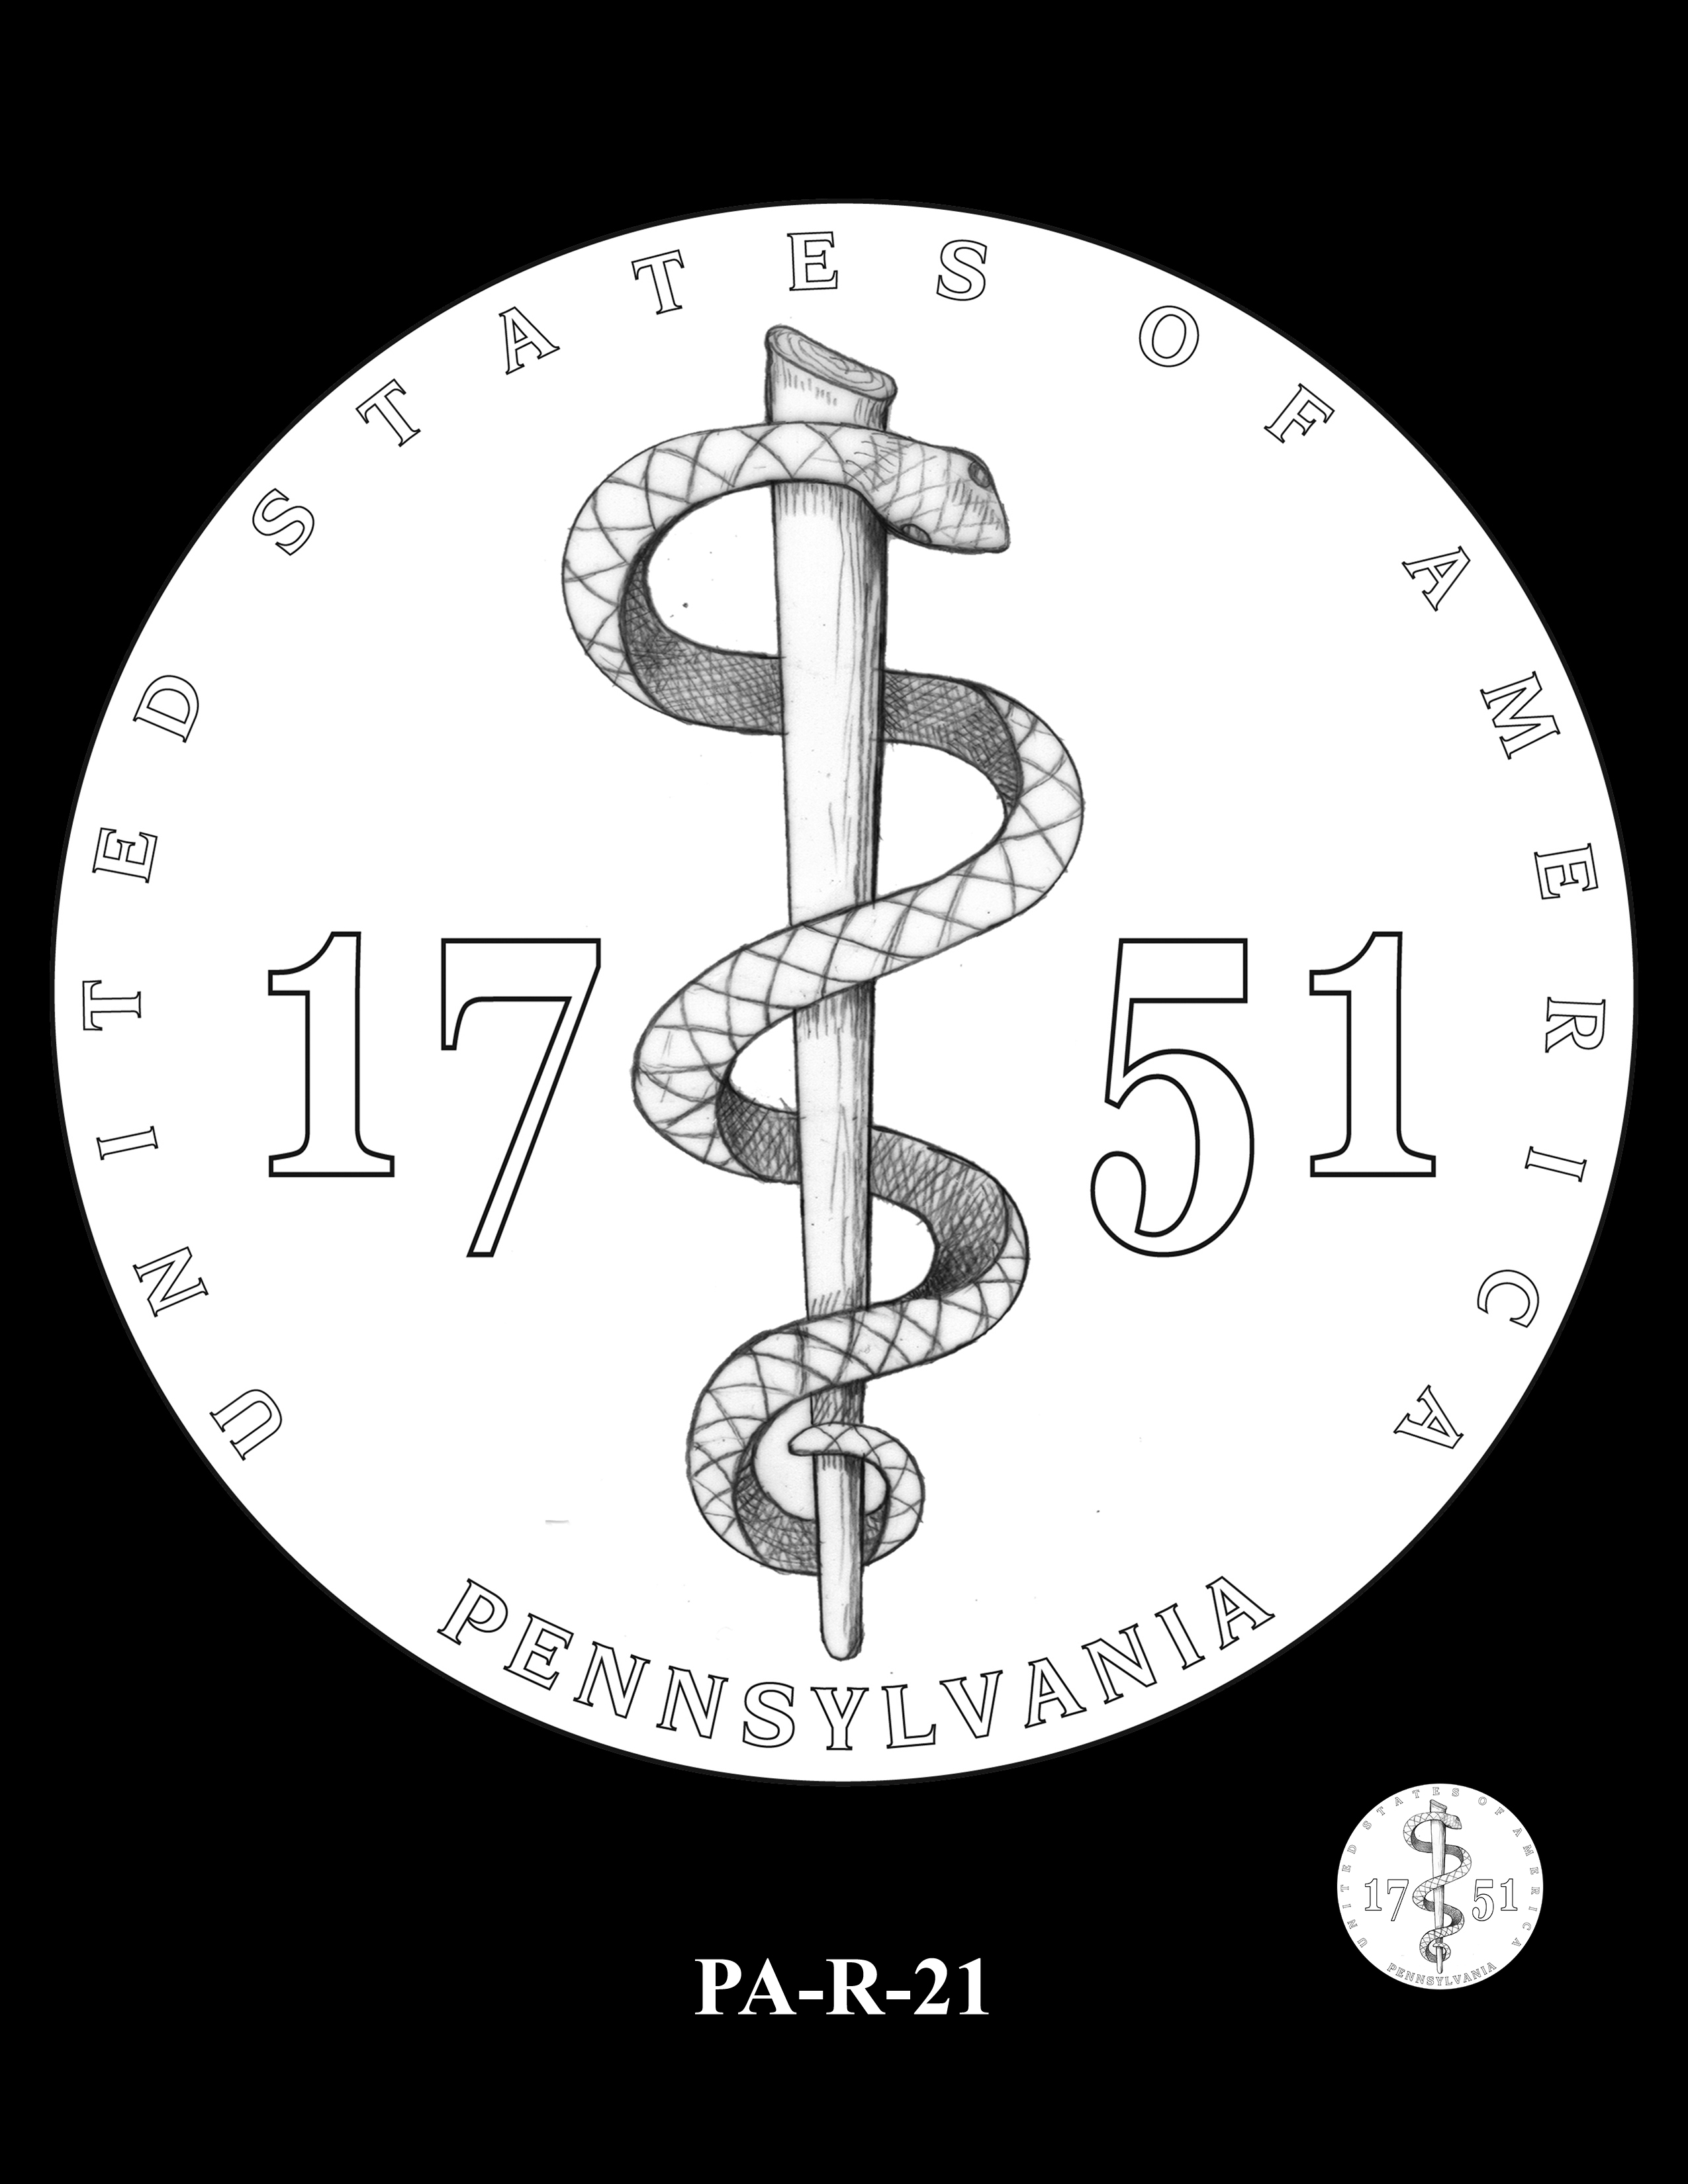 PA-R-21 -- 2019 American Innovation $1 Coin Program